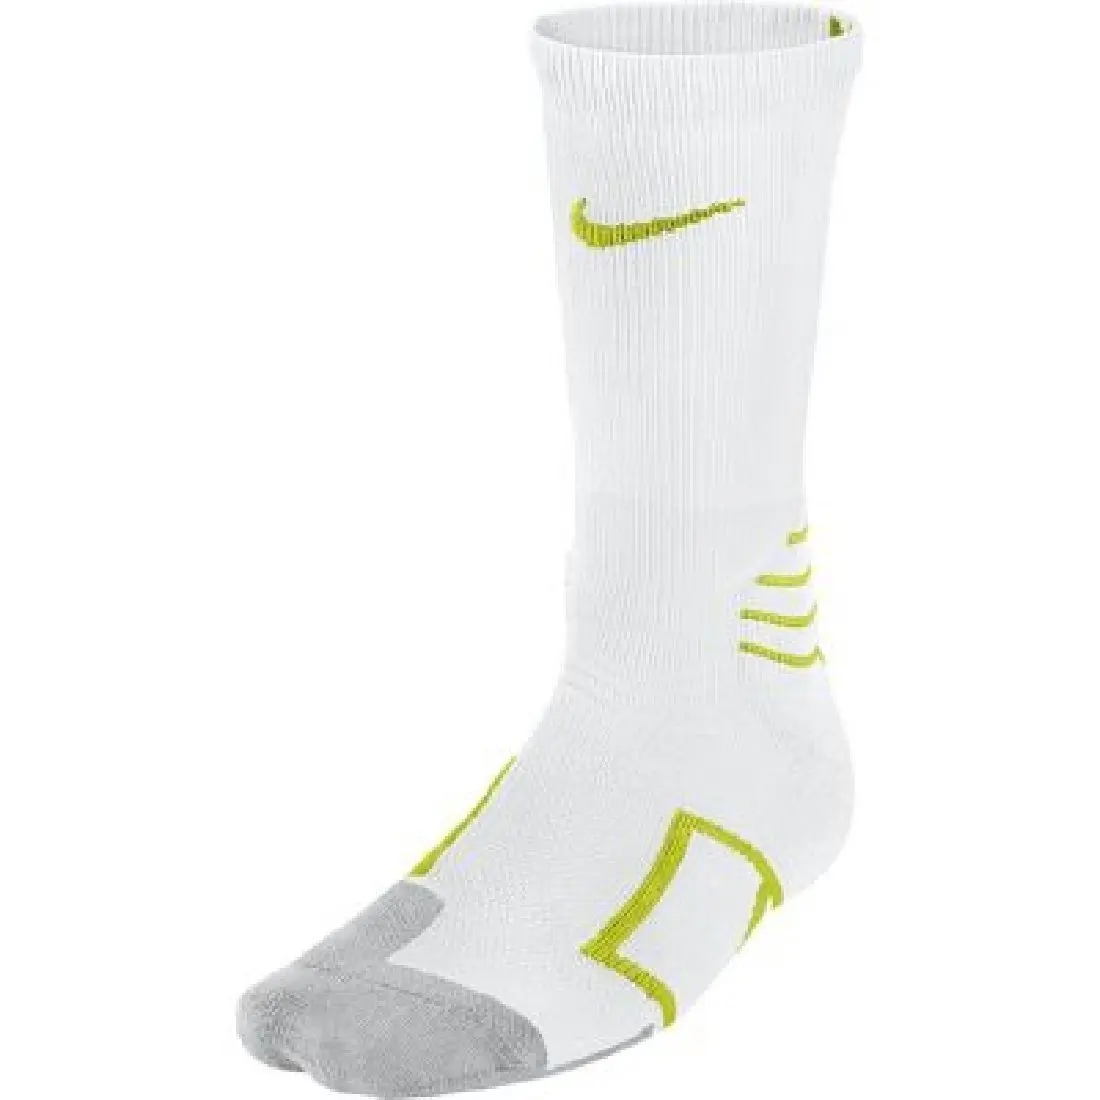 Nike Elite Crew Socks Size Chart